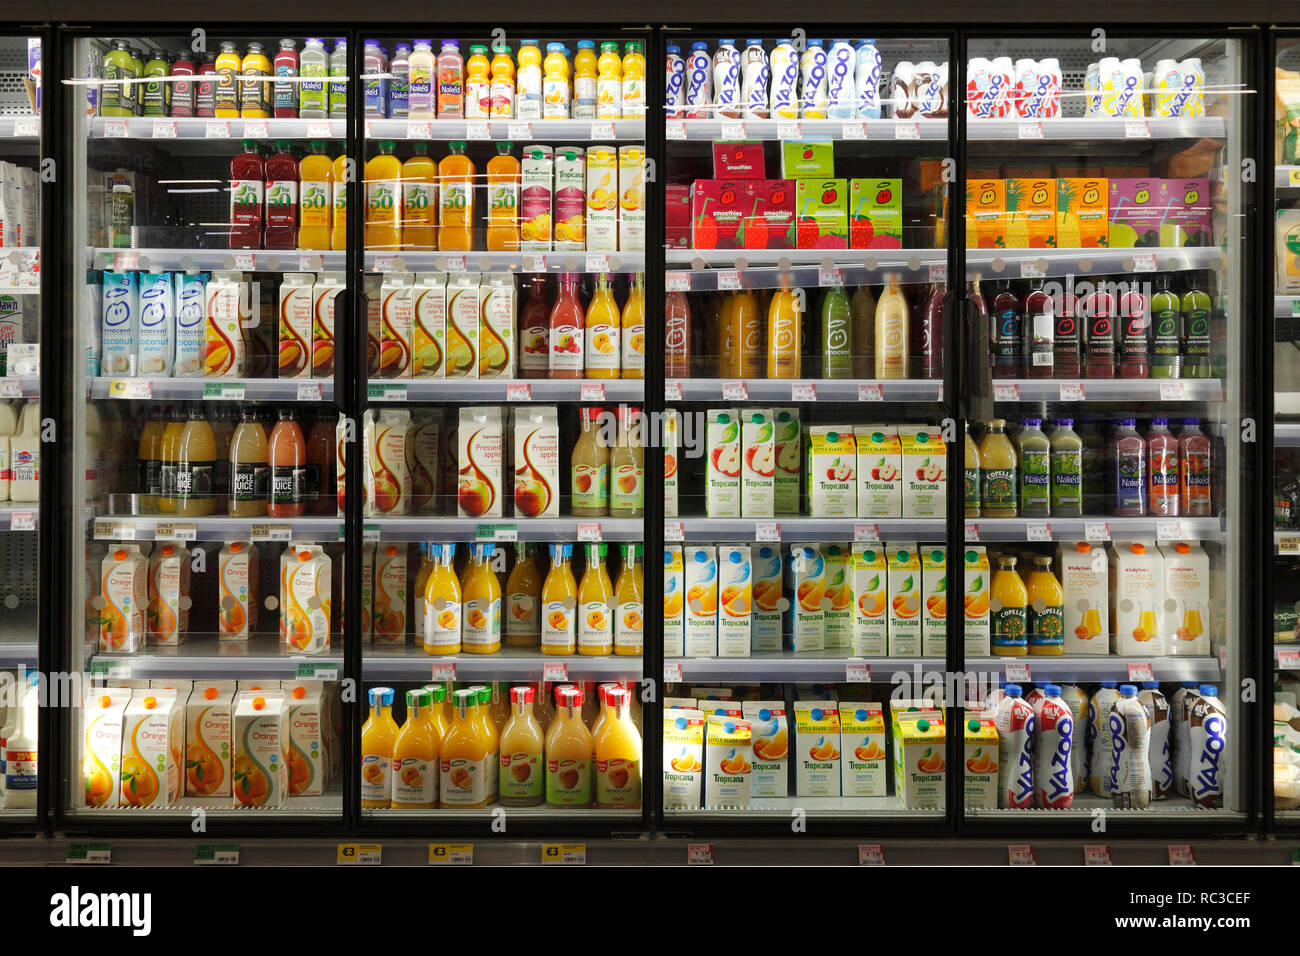 https://c8.alamy.com/comp/RC3CEF/juice-fridge-in-a-supermarket-RC3CEF.jpg